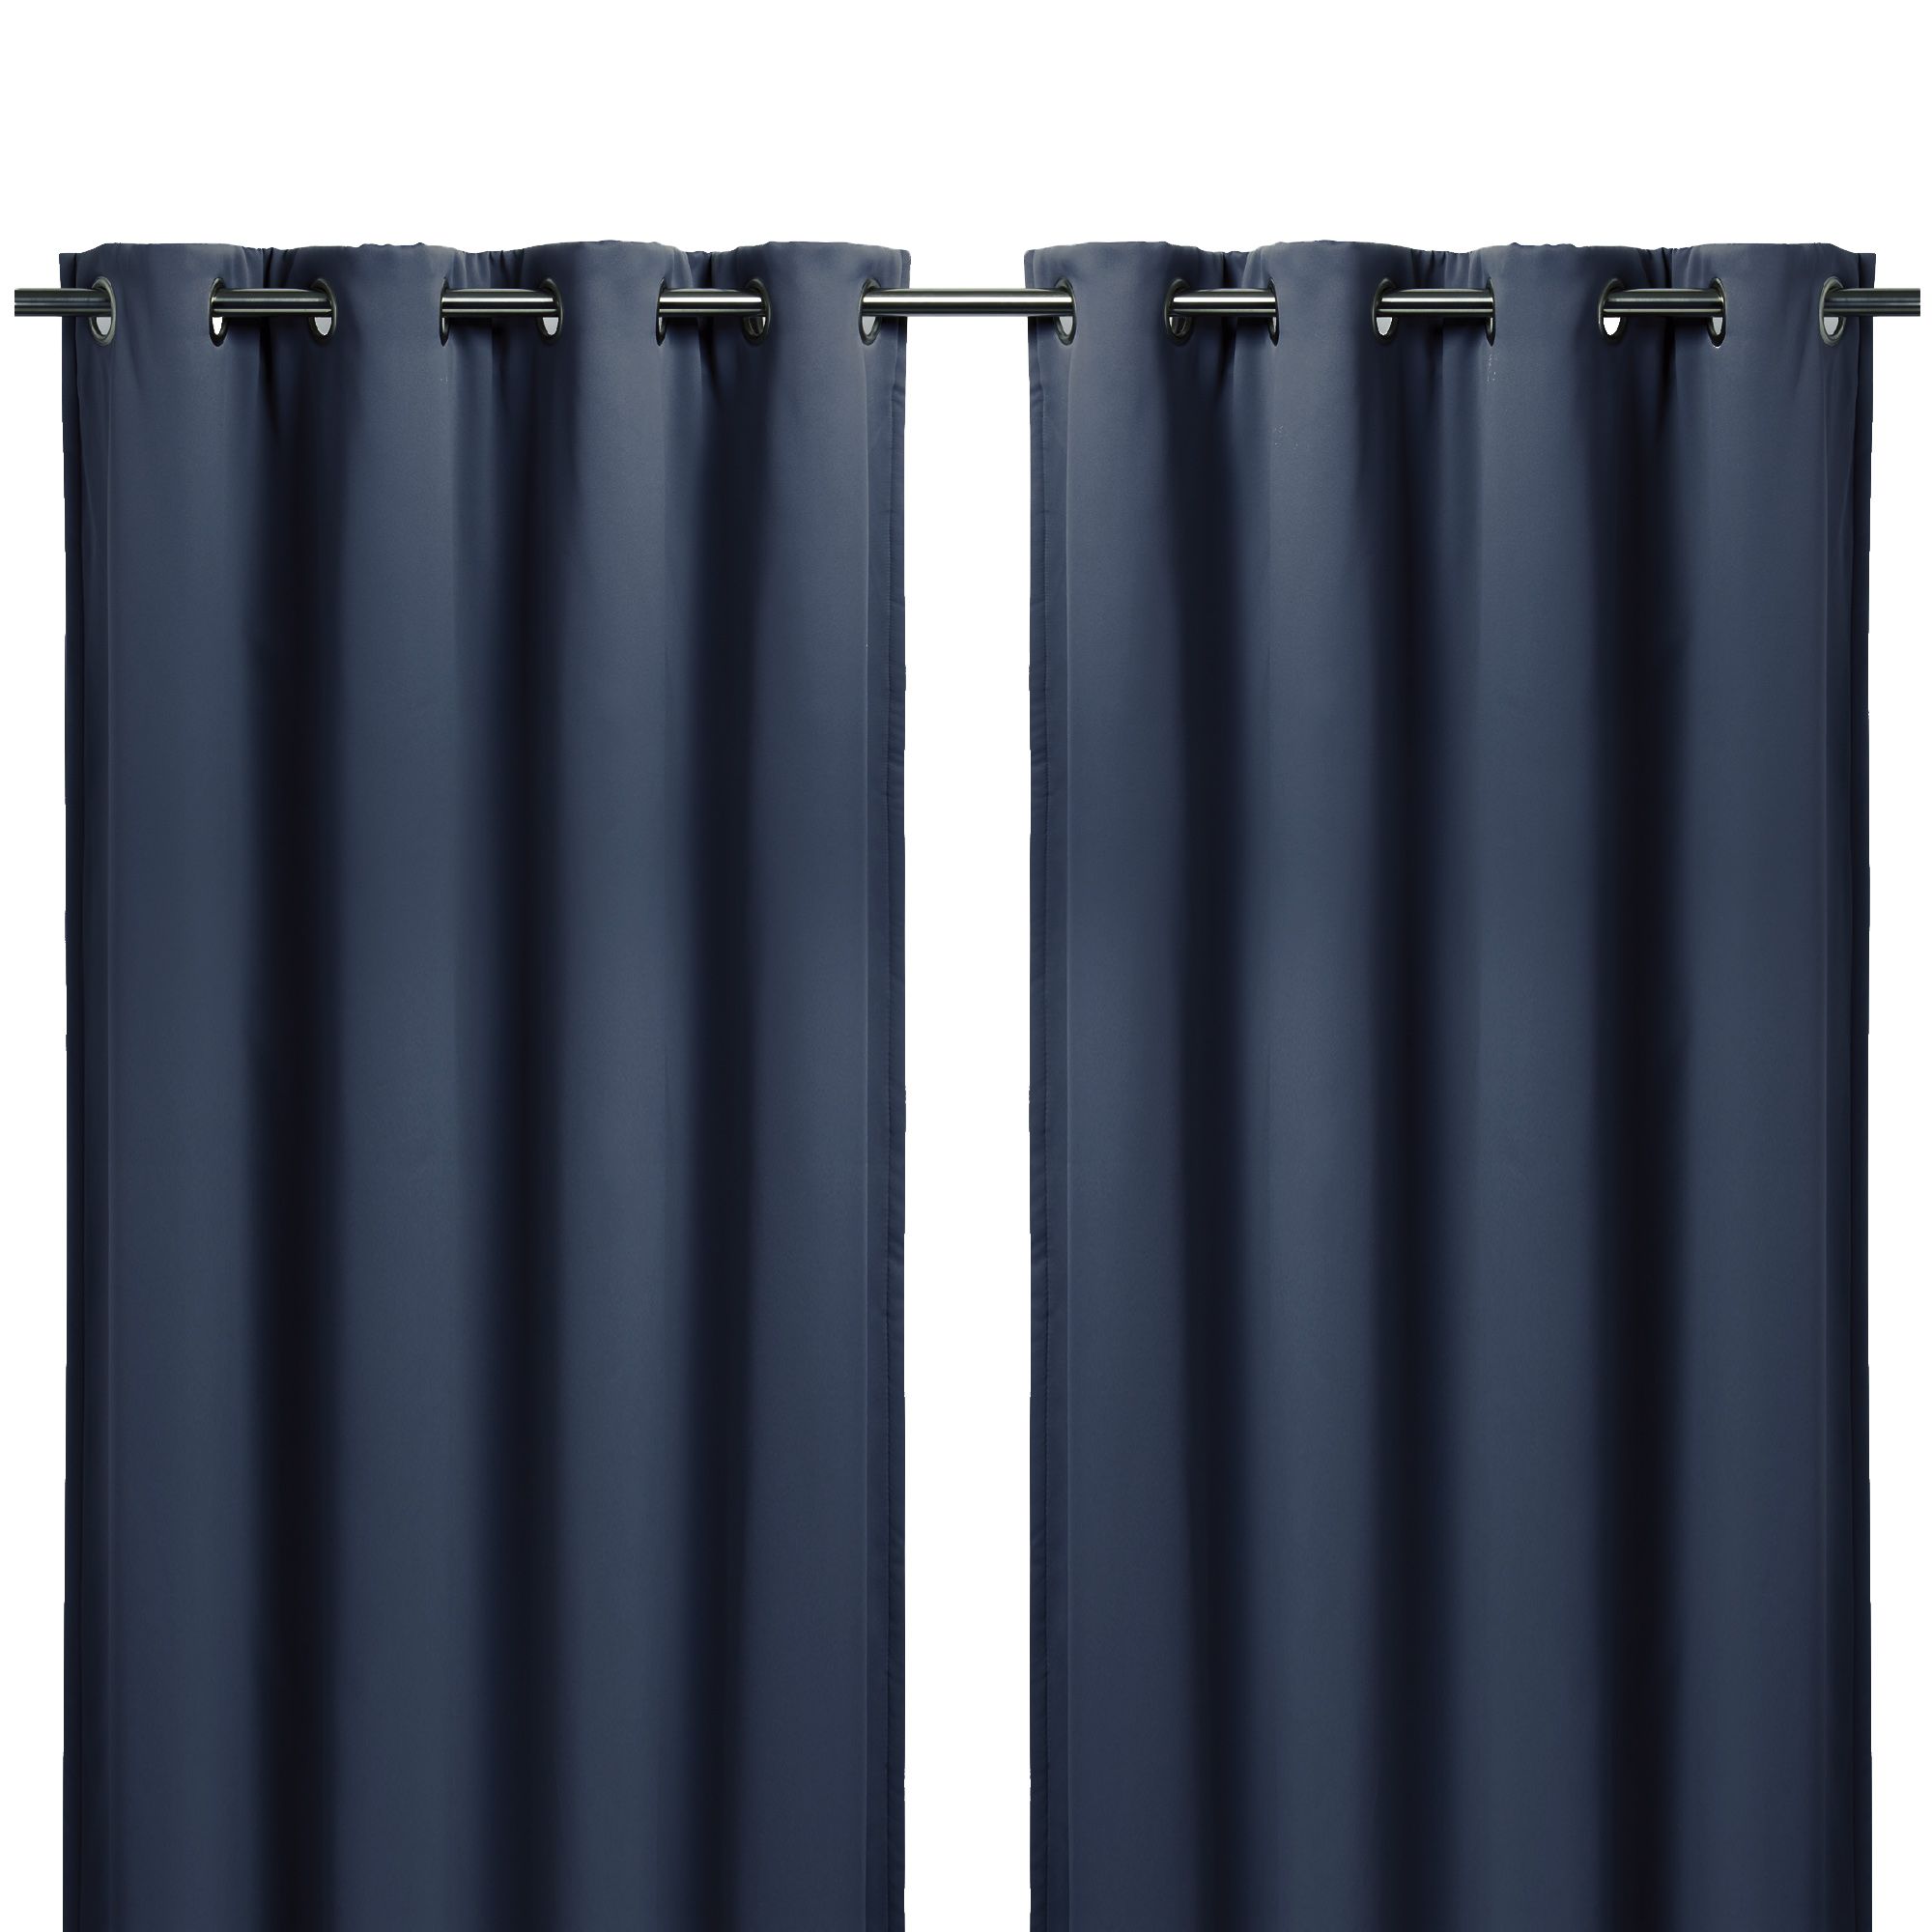 Vestris Navy Plain Blackout & thermal Eyelet Curtain (W)167cm (L)228cm, Pair